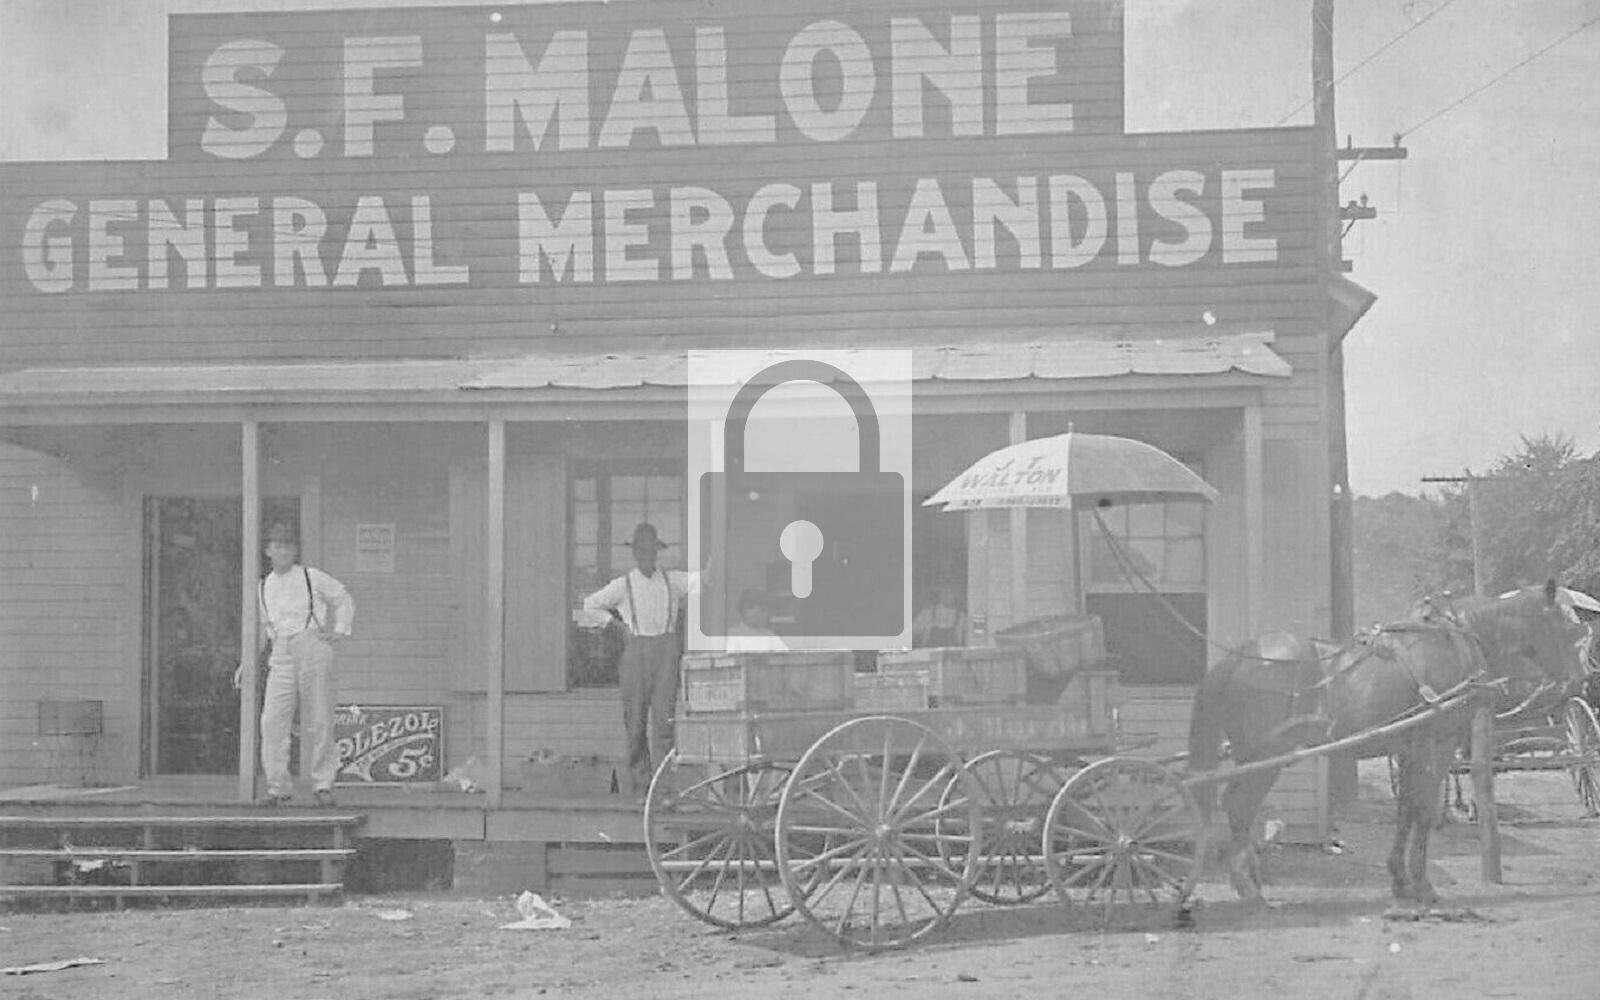 S F Malone General Merchandise Store Tuscaloosa Alabama AL Reprint Postcard